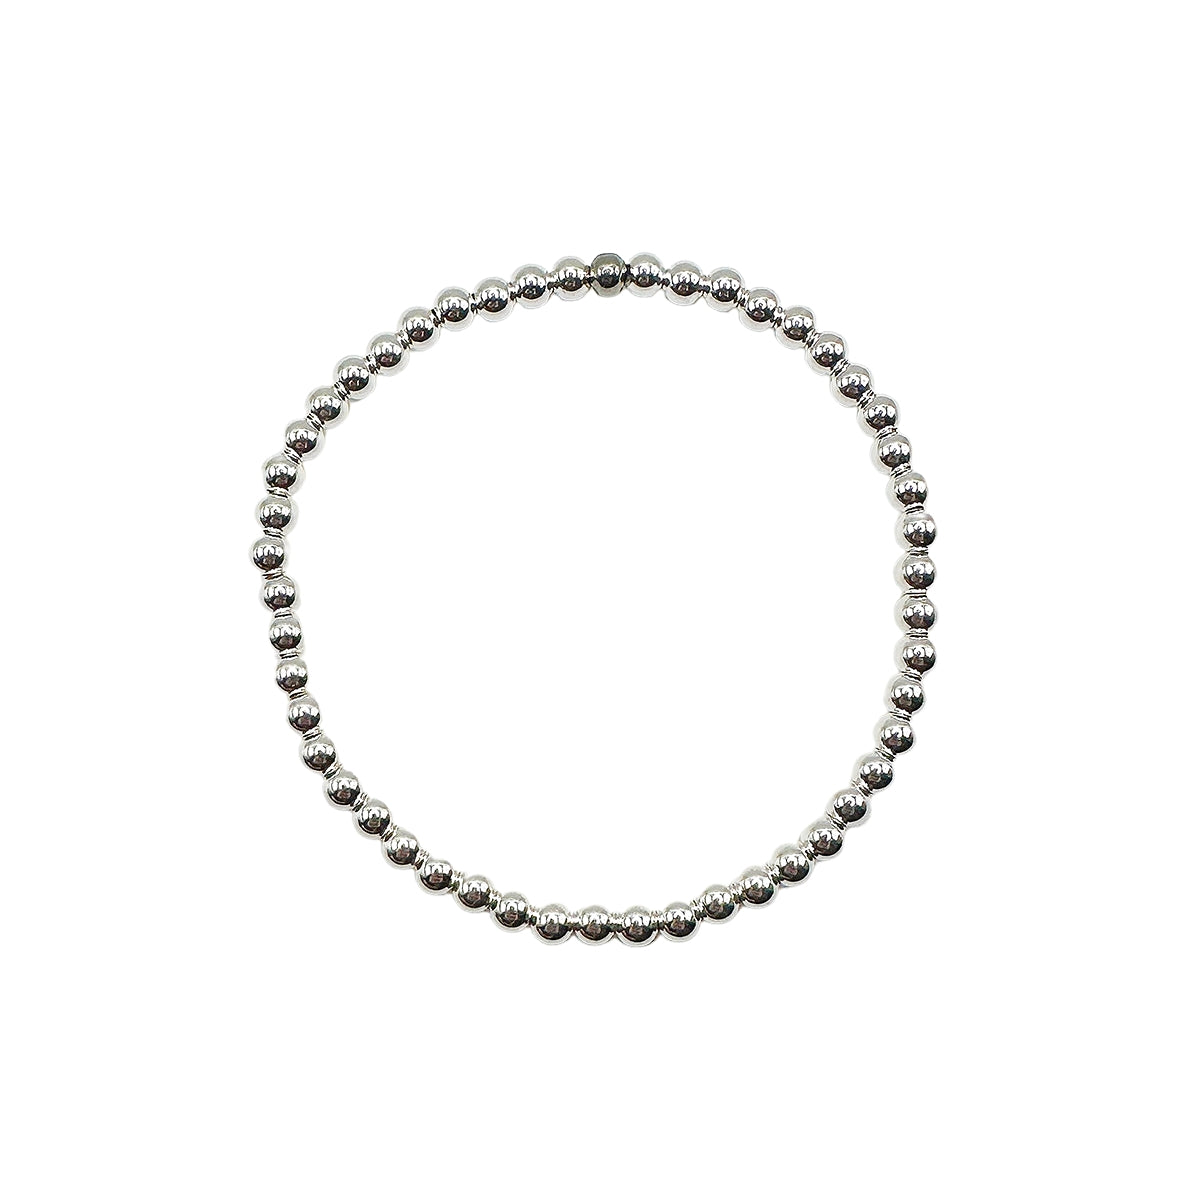 Featherly sterling silver 4mm beaded stretech bracelet 